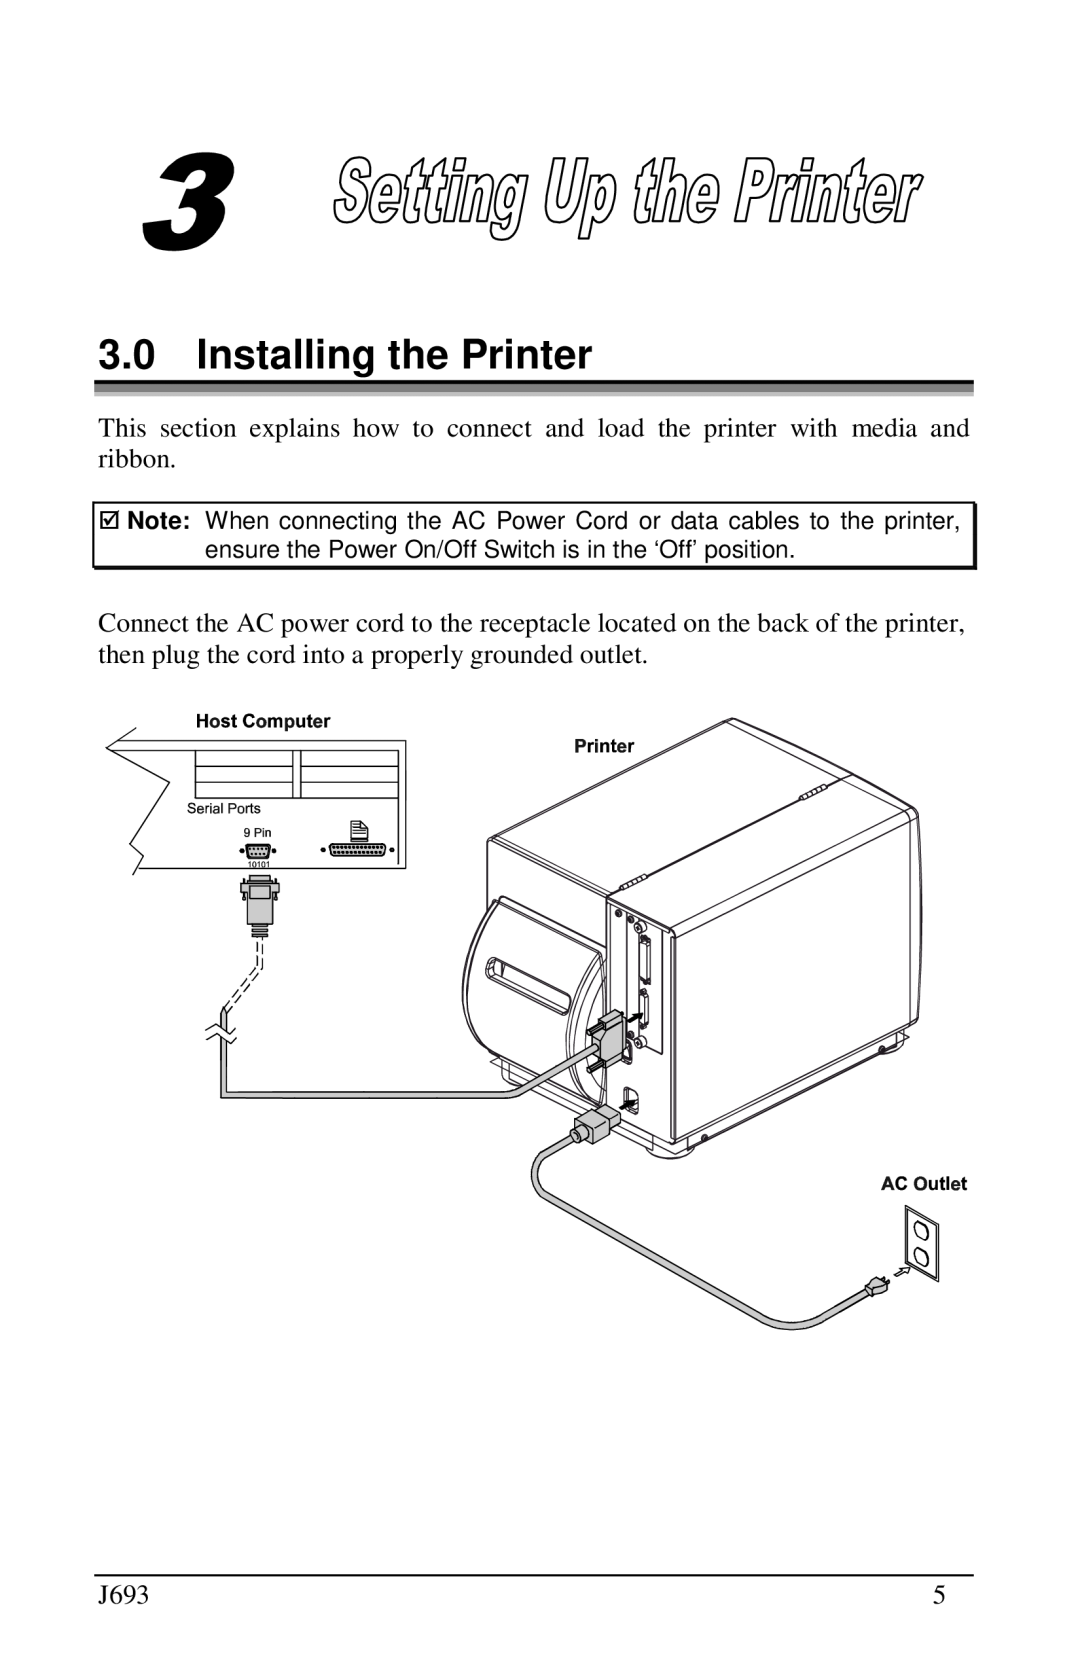 Pitney Bowes J693 manual Installing the Printer 